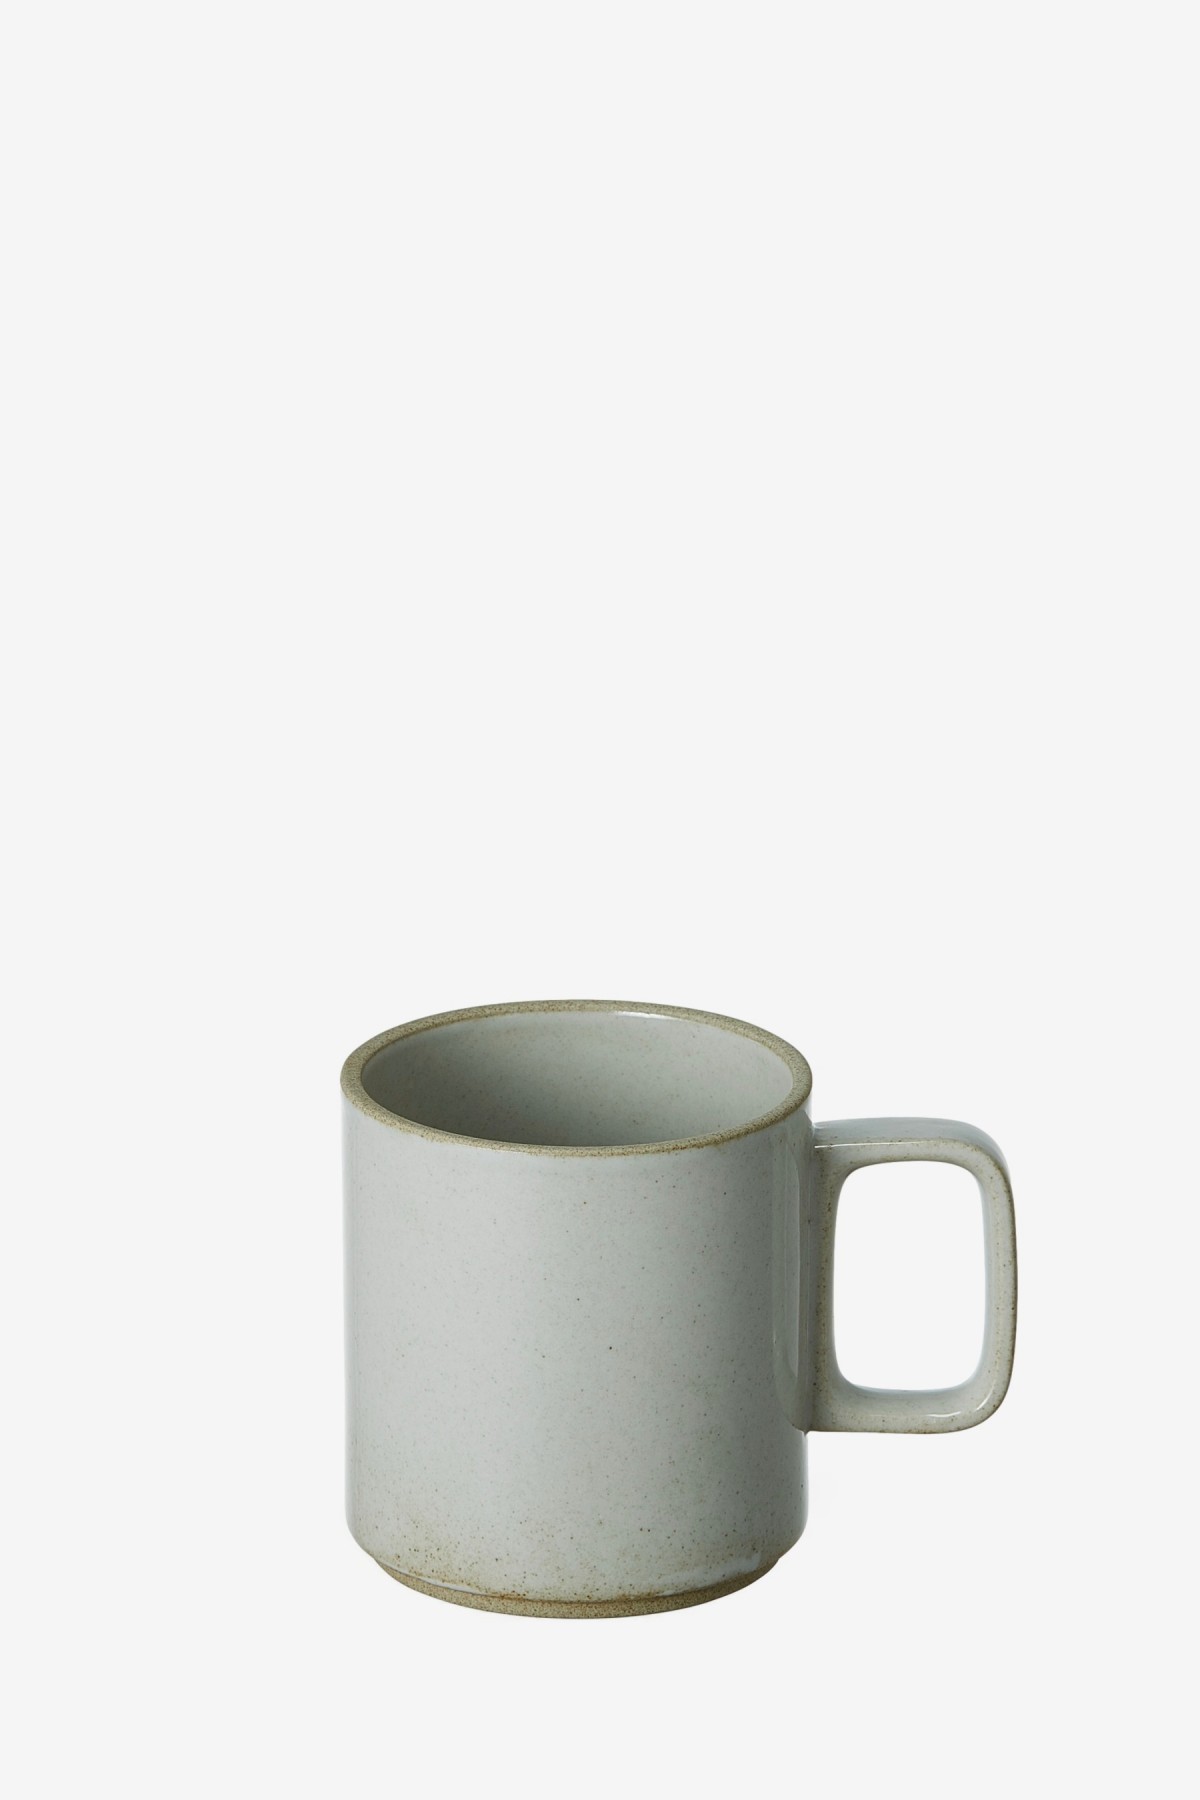 Hasami Porcelain Mug Cup 85×89mm Medium in Clear Grey